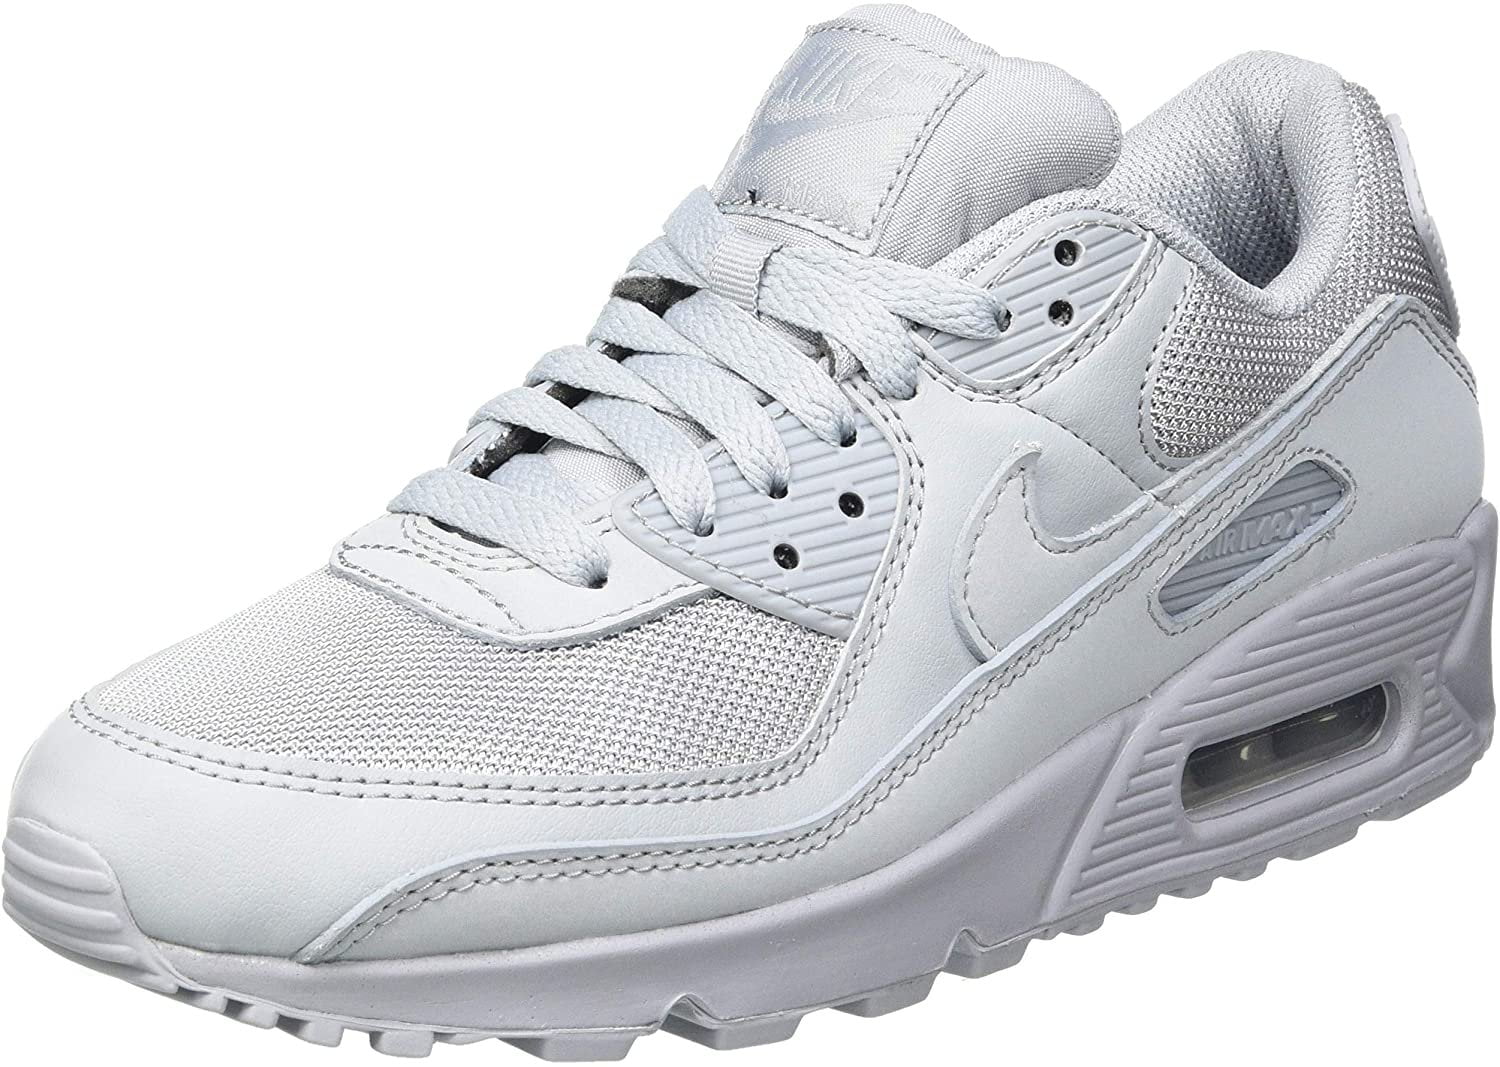 Solicitud Profeta salto Nike Men's AIR MAX 90 Running Shoe, Wolf Grey/Wolf Grey/Wolf Grey/Black, 6  UK - Walmart.com